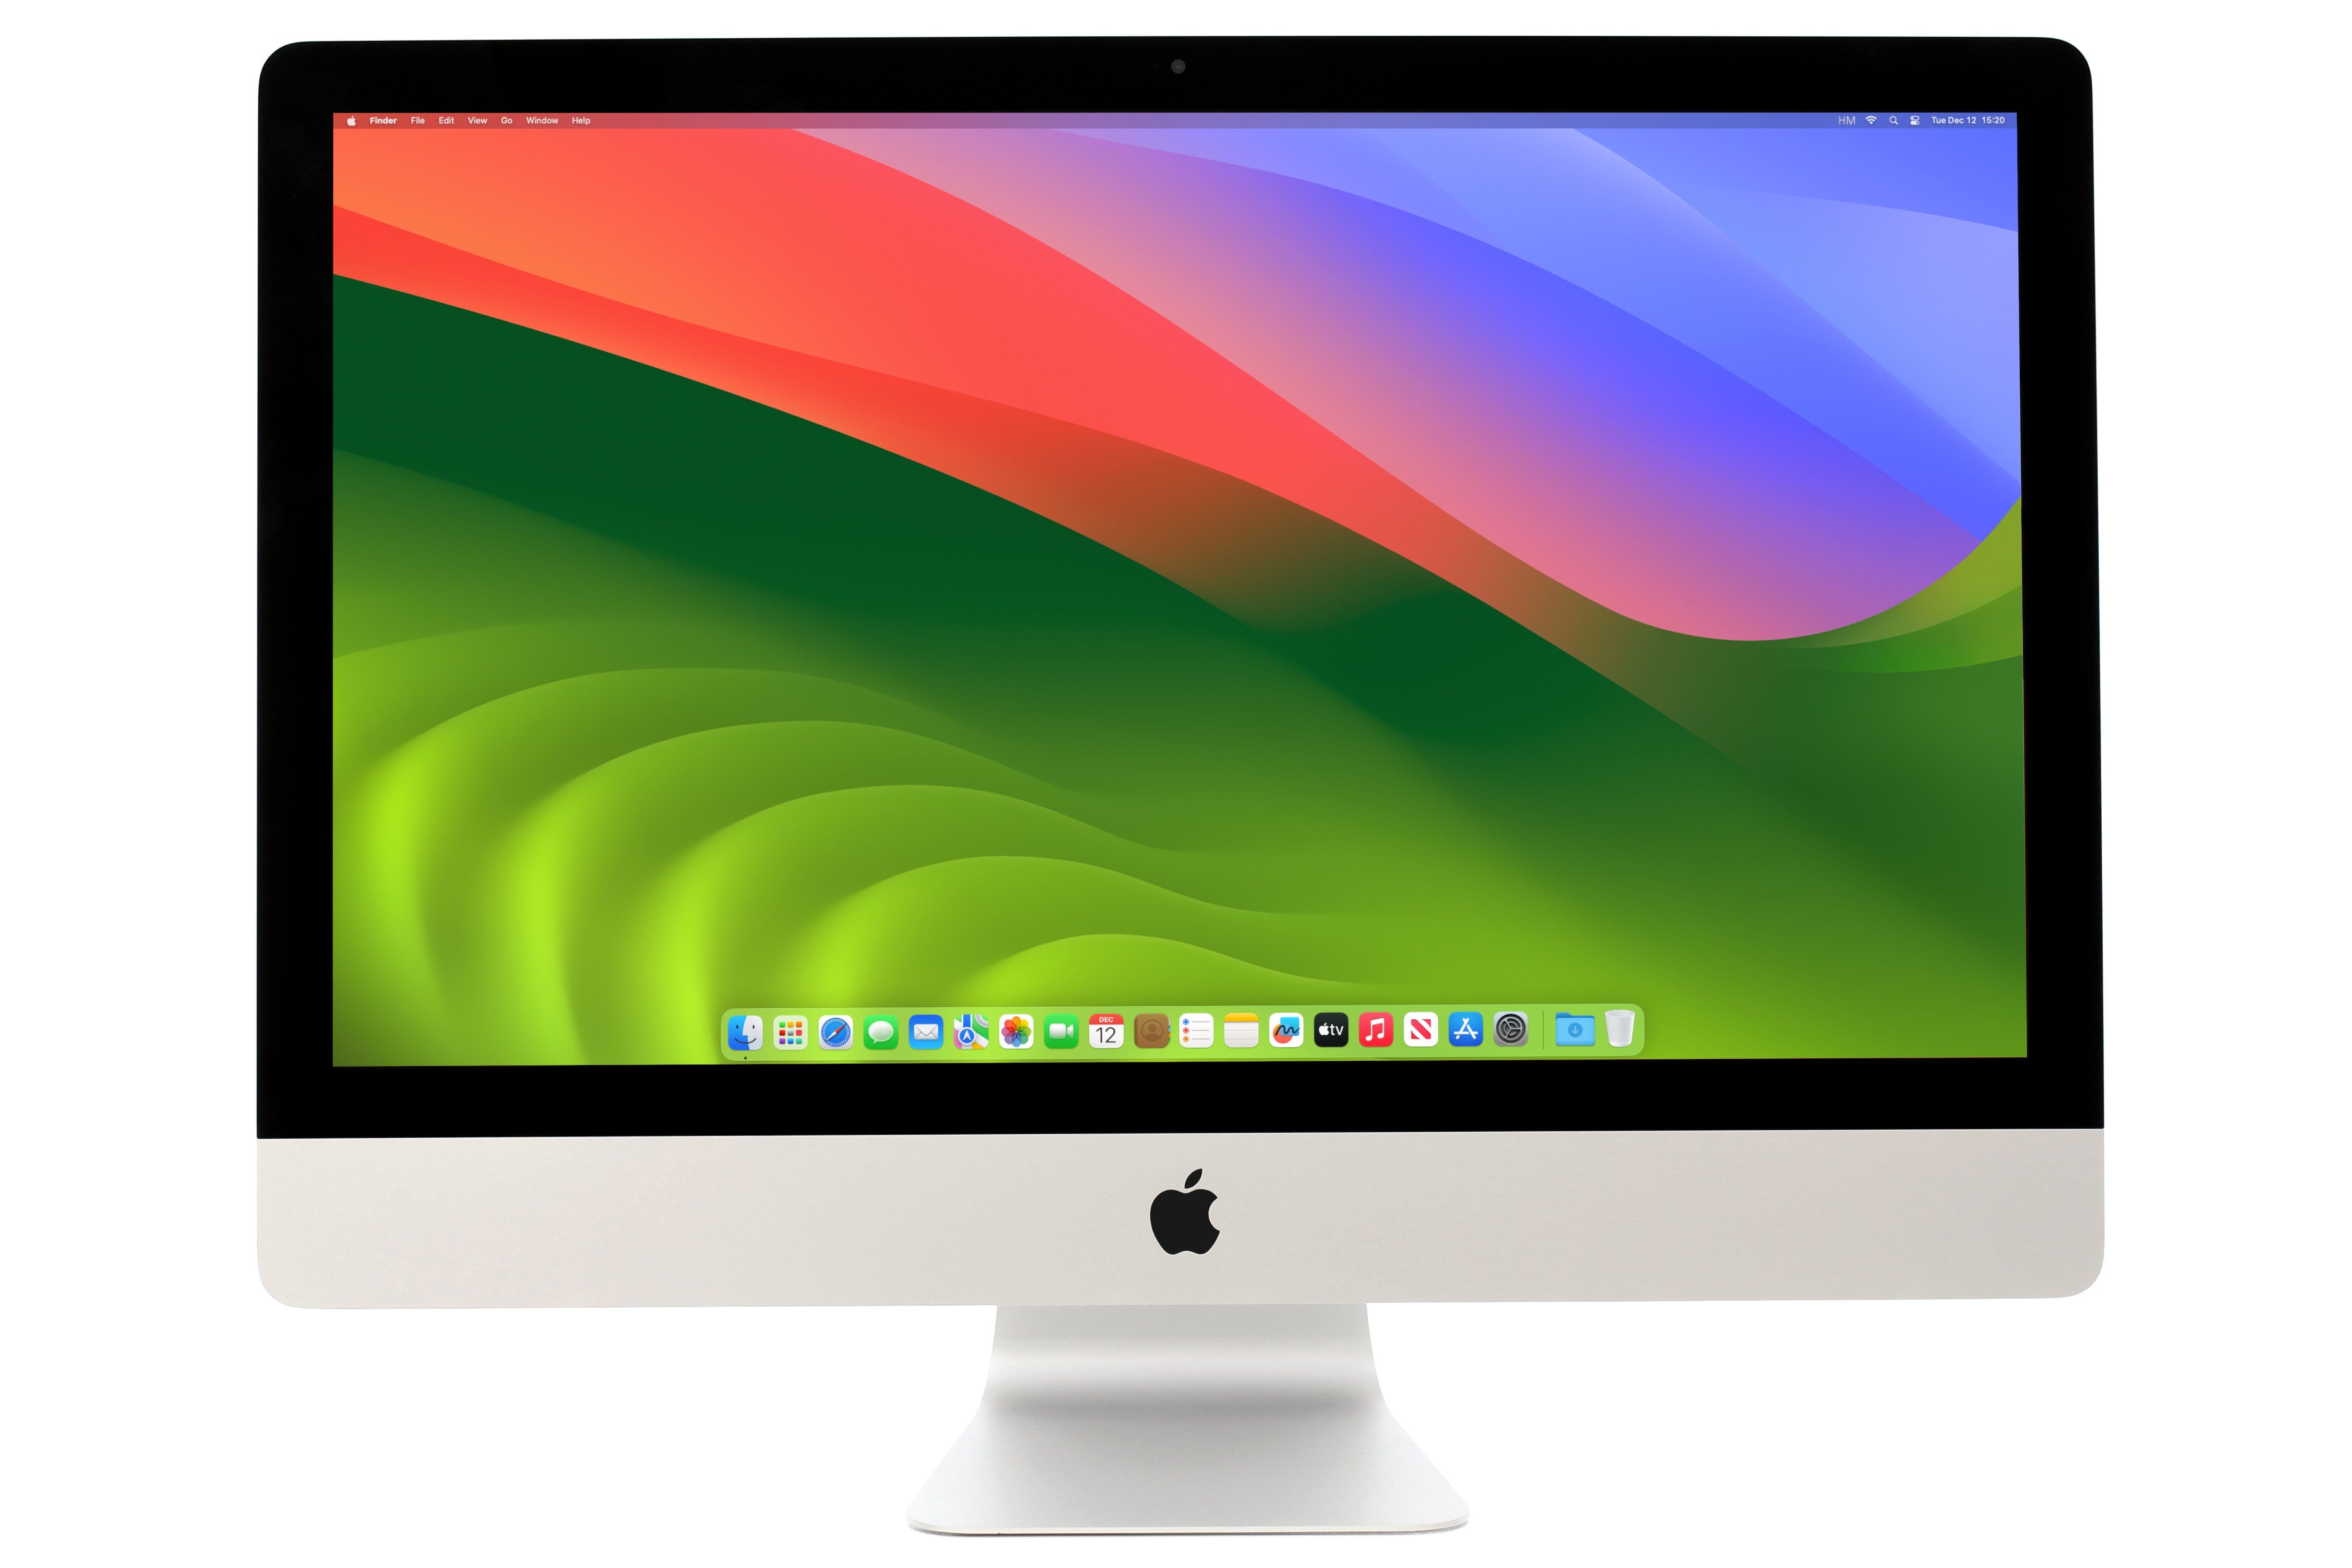 Refurbished iMac 27-inch 3.8GHz Core i7 2020 Hoxton Macs